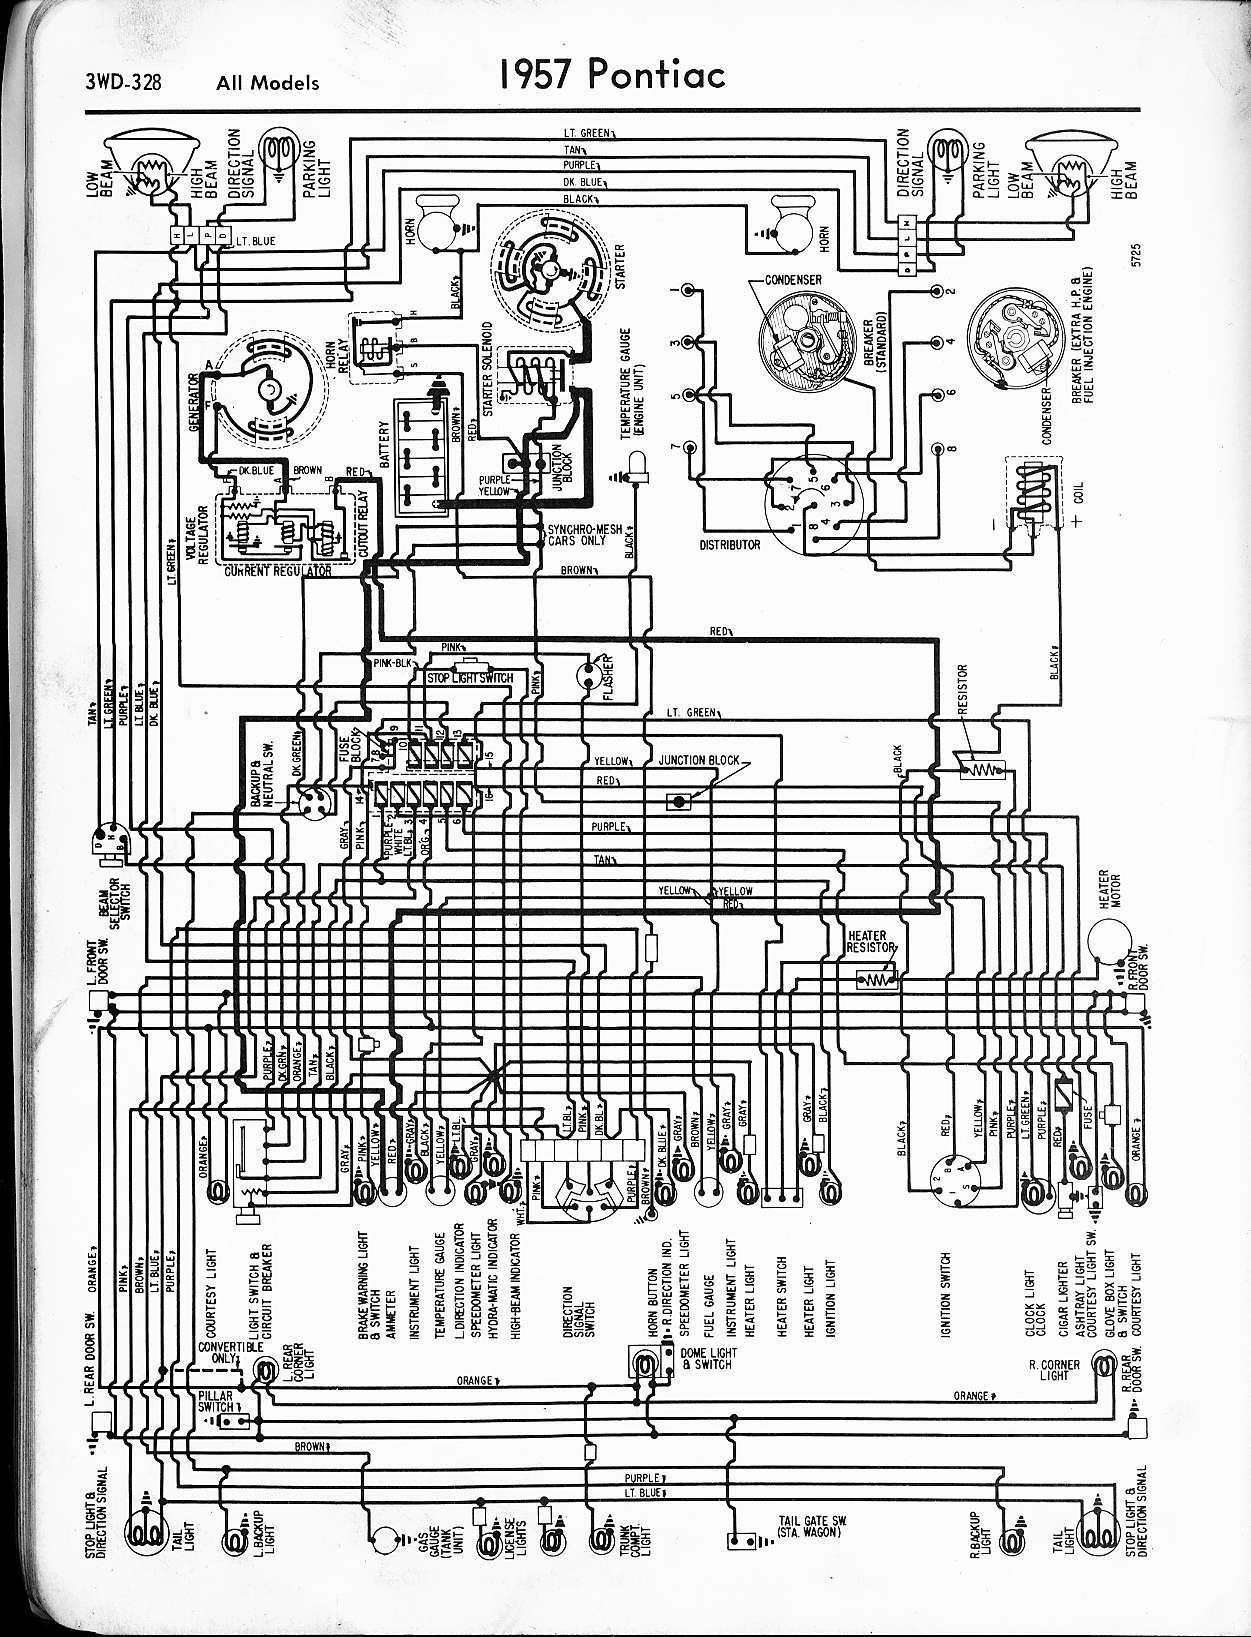 Pontiac wiring 1957-1965 Pontiac Charging Wiring Diagram The Old Car Manual Project